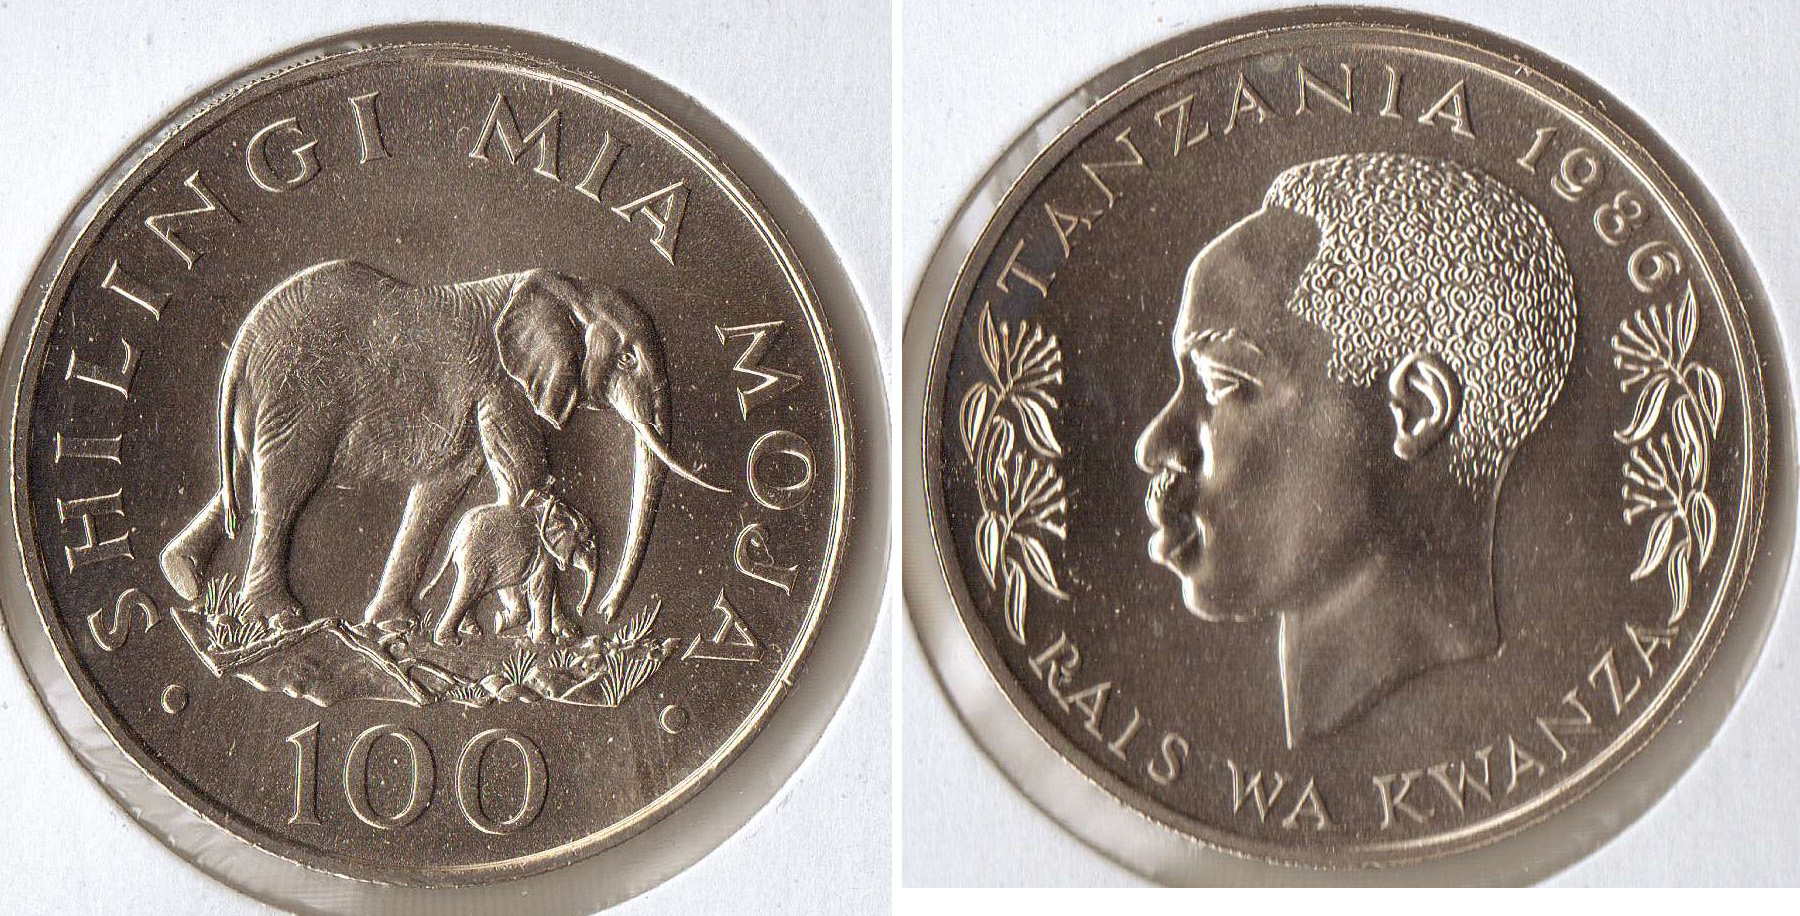 1986 tanzania 100 shillings.jpg